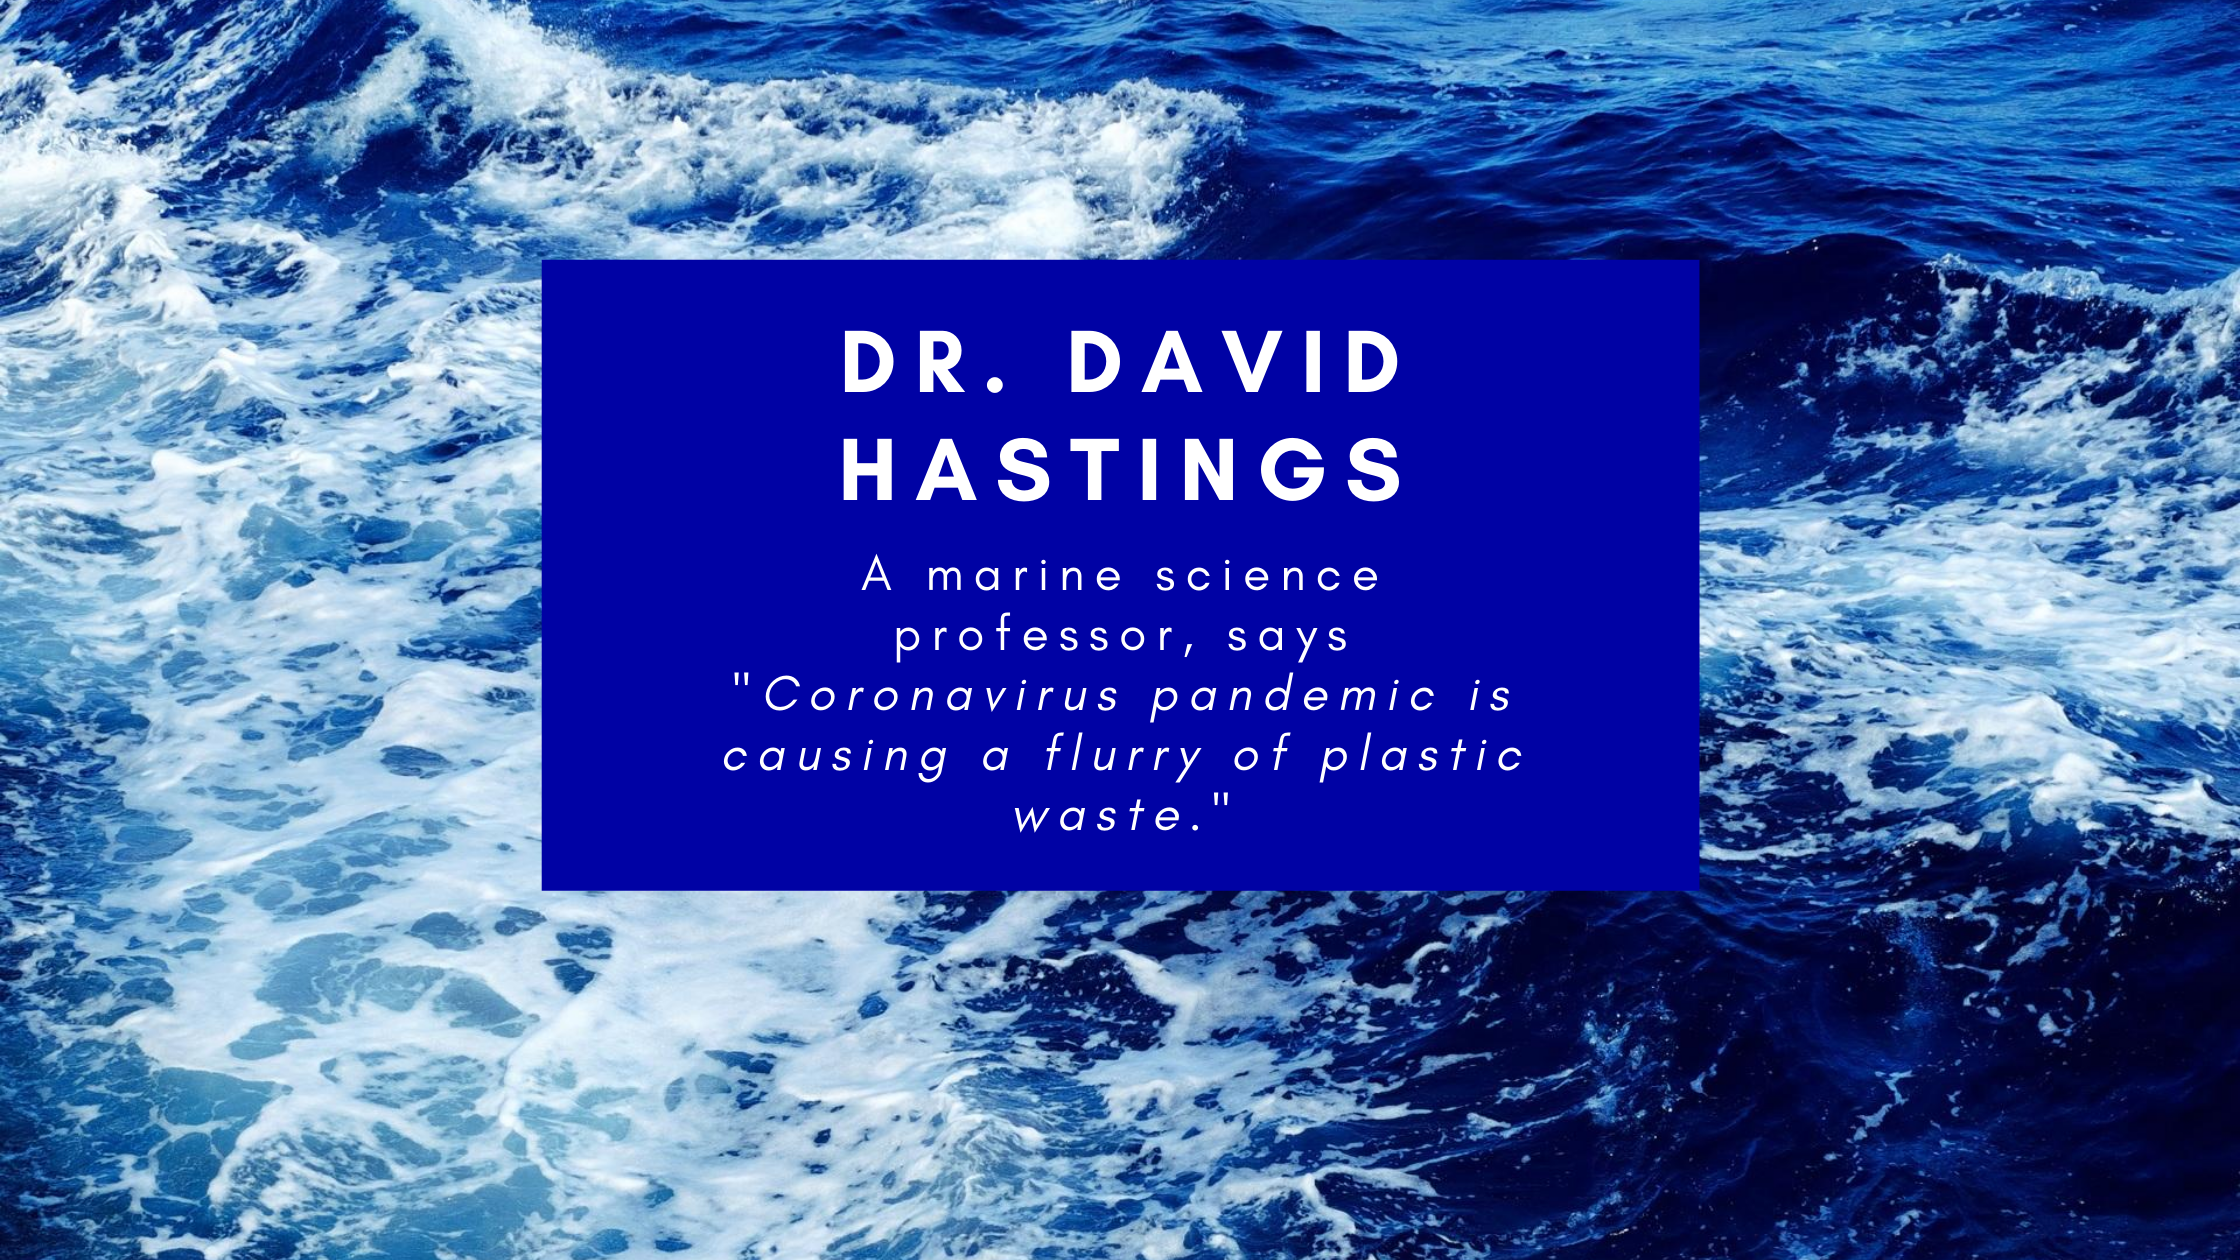 Dr. David Hastings, marine science professor, says Coronavirus pandemic is causing a flurry of plastic waste.